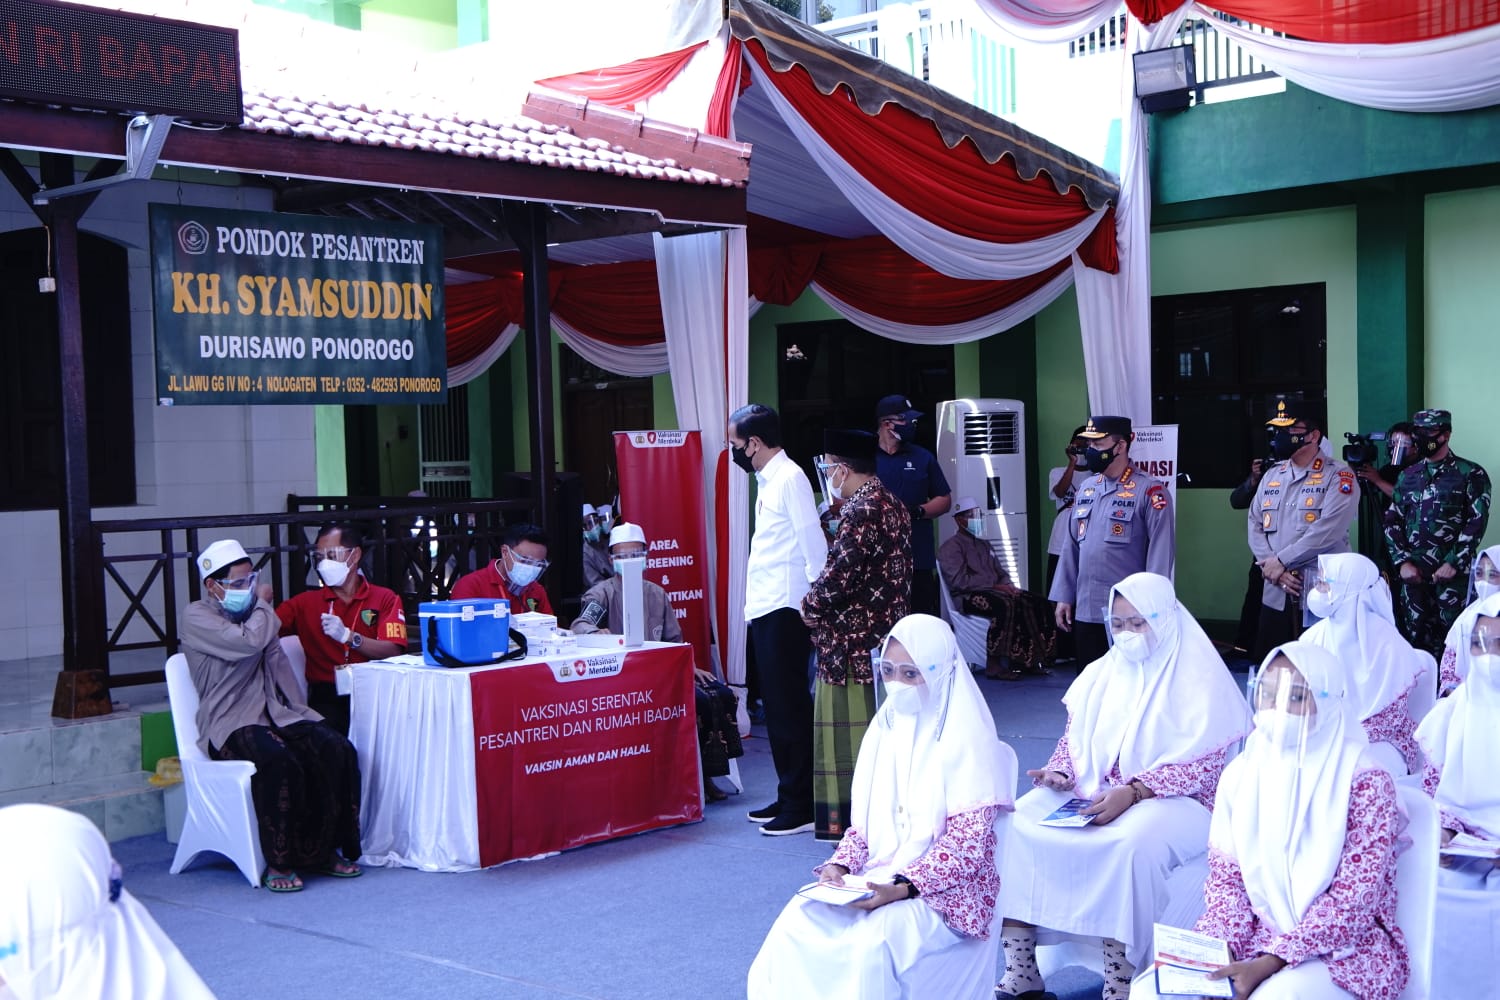 Presiden RI, Joko WIdodo meninjau kegiatan Vaksinasi Merdeka di Pondok Pesantren KH Syamsudin, Durisawo Ponorogo, Jawa Timur, Indonesia